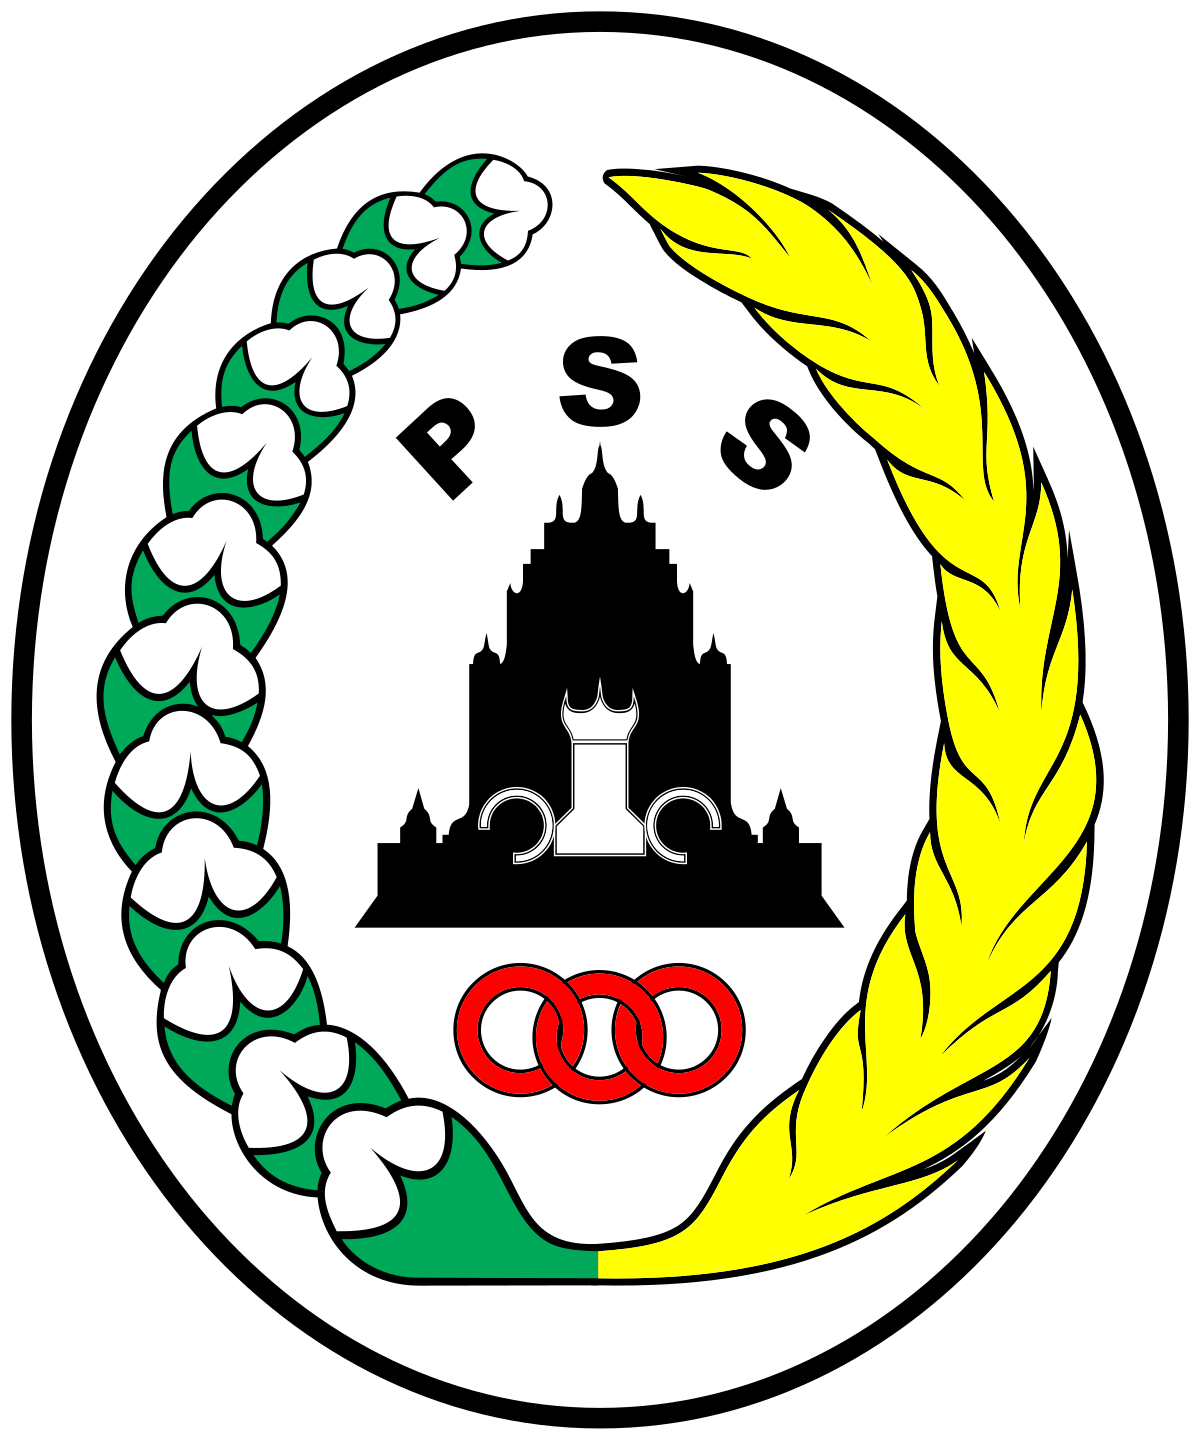 PSS Sleman - Wikipedia bahasa Indonesia, ensiklopedia bebas